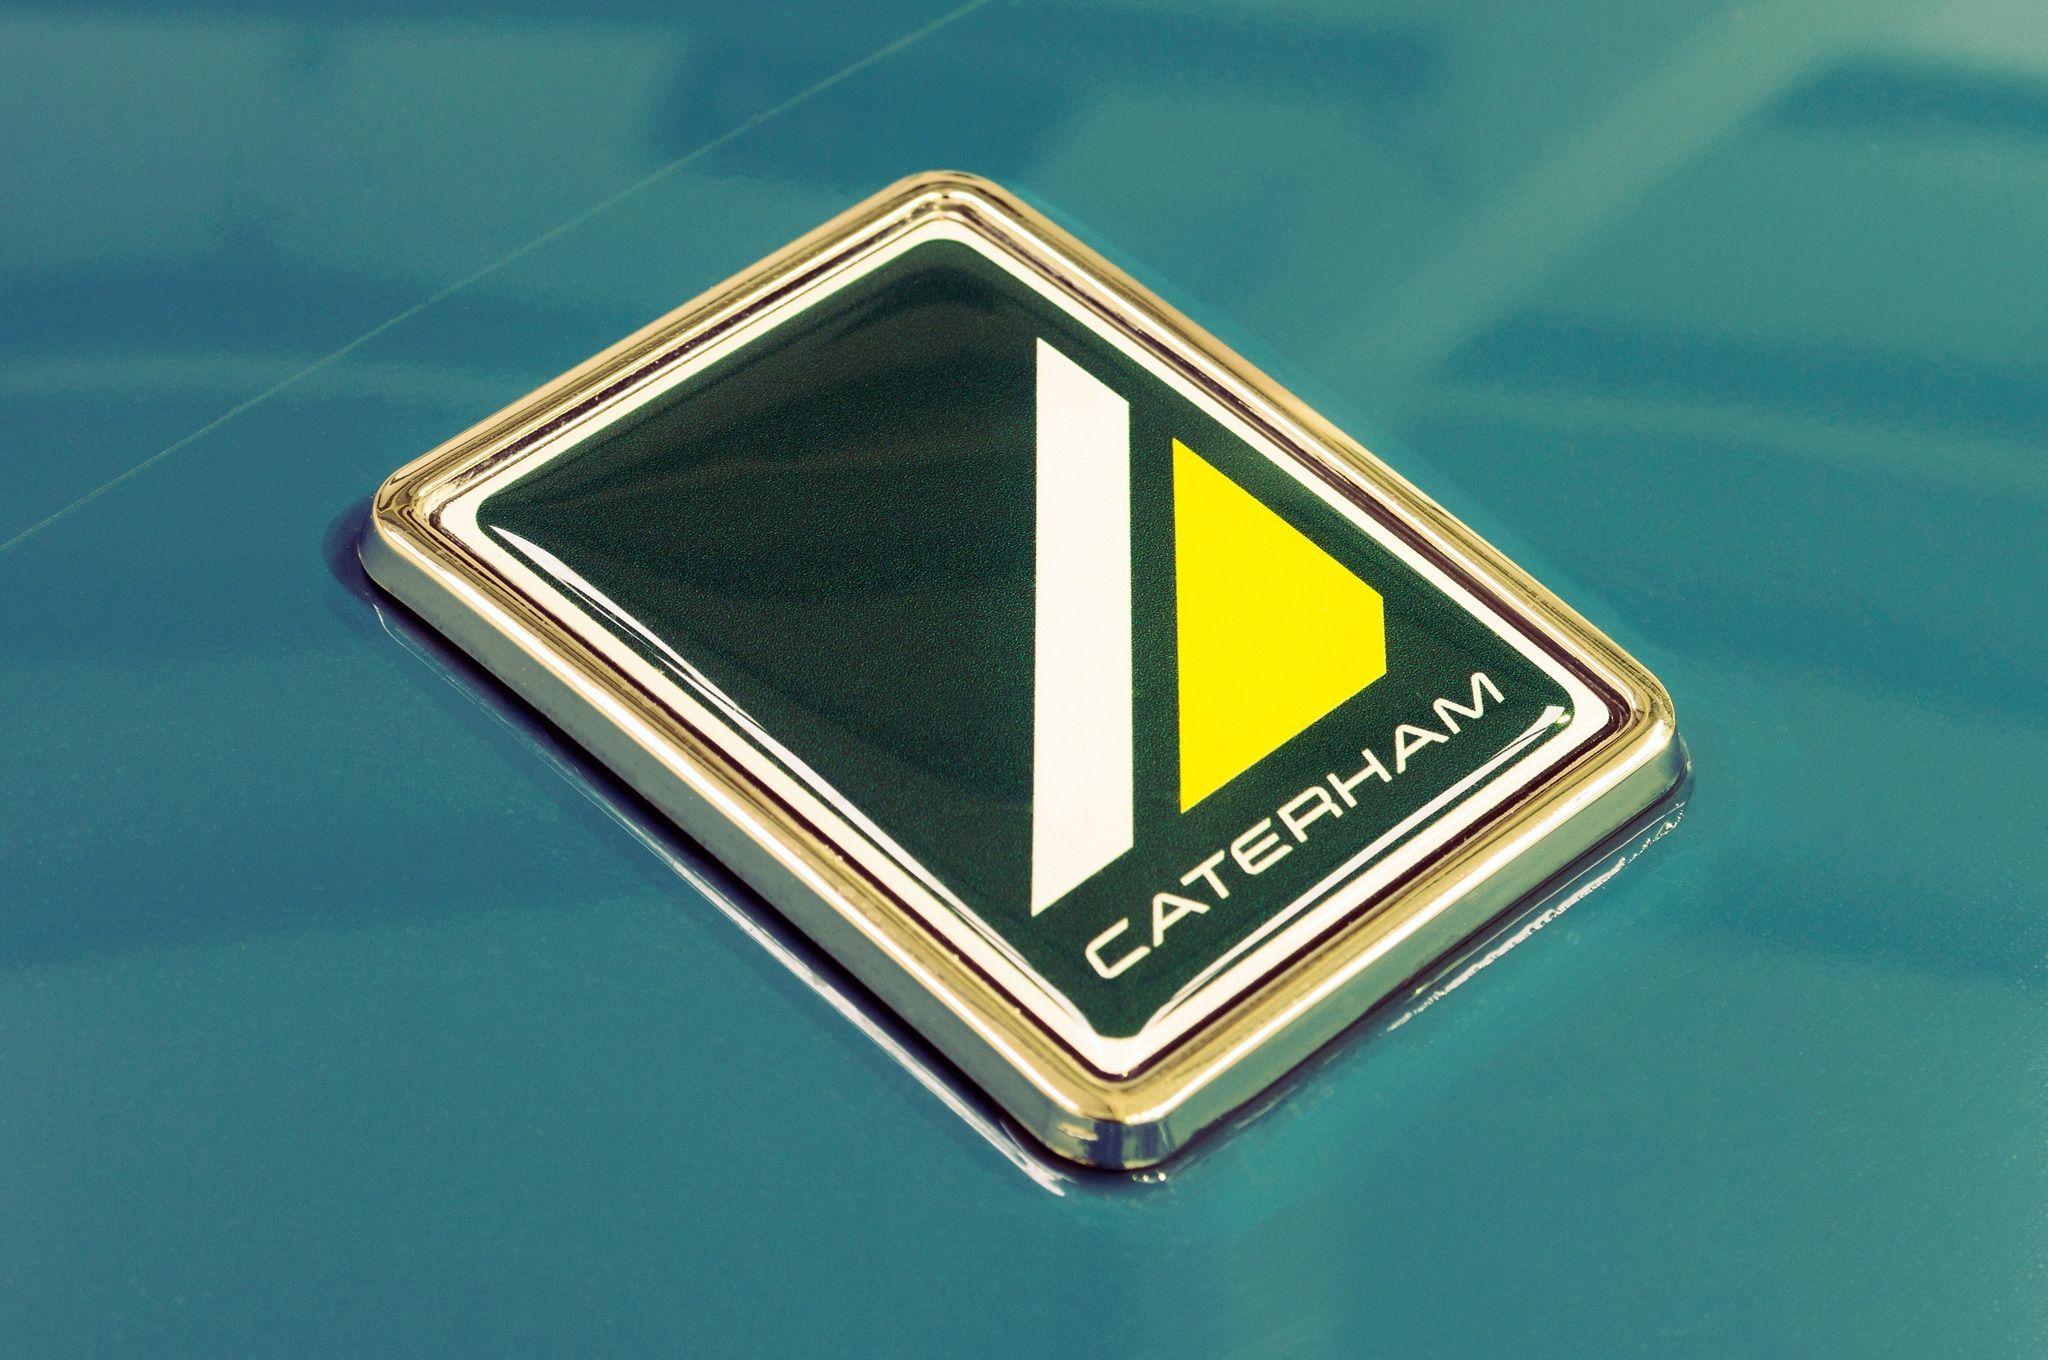 Caterham Logo - Caterham logo. Caterham. Car logos, Logos, Cars